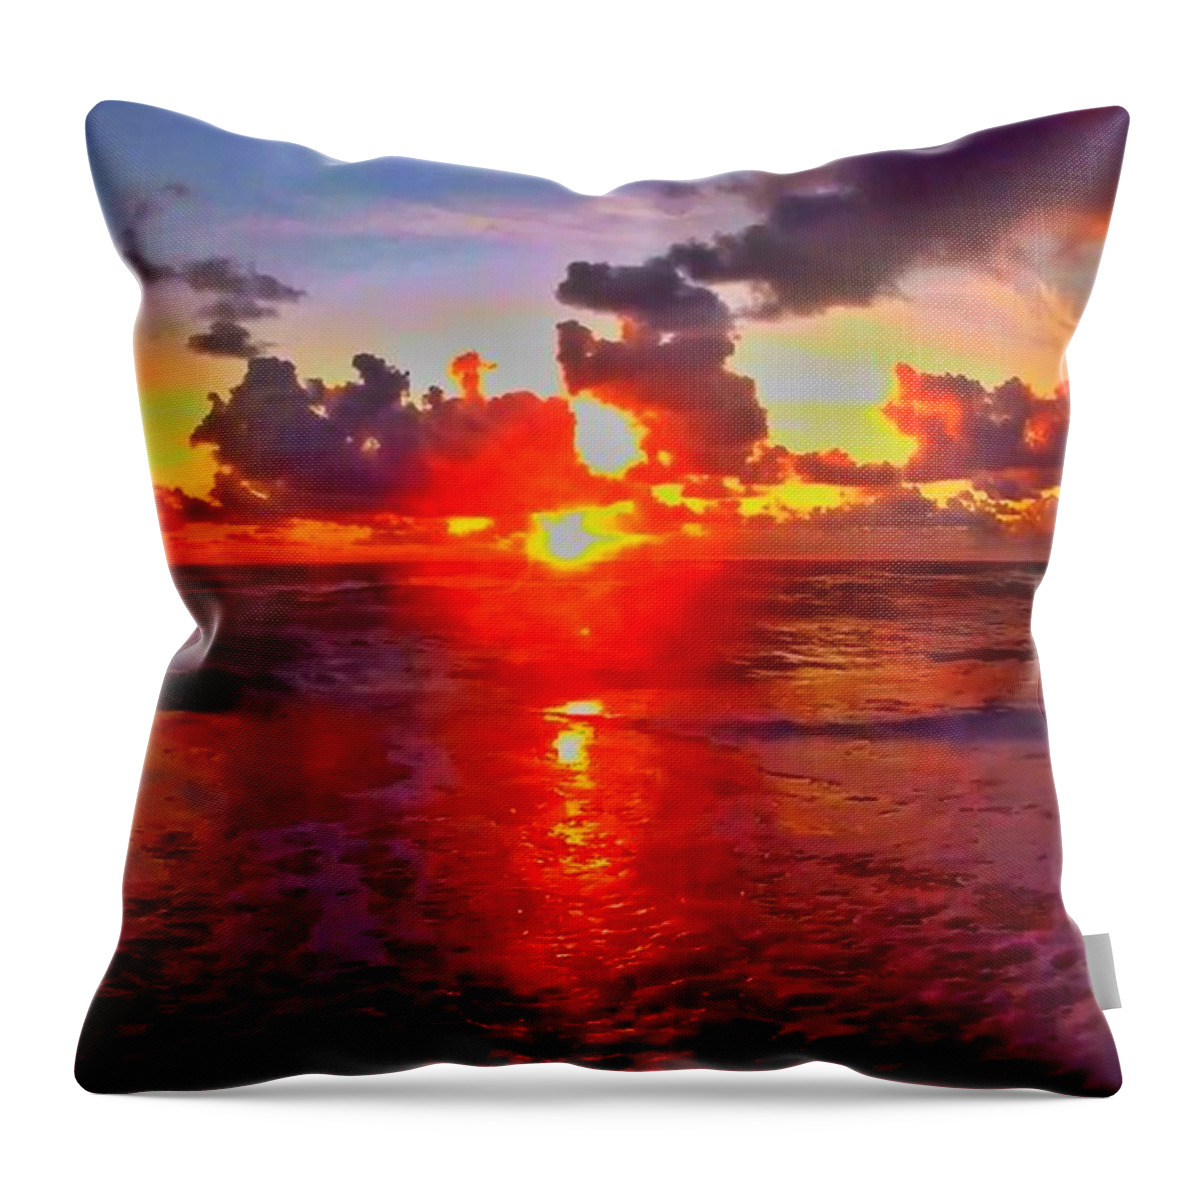 Sunrise Throw Pillow featuring the photograph Sunrise Beach 856 by Rip Read